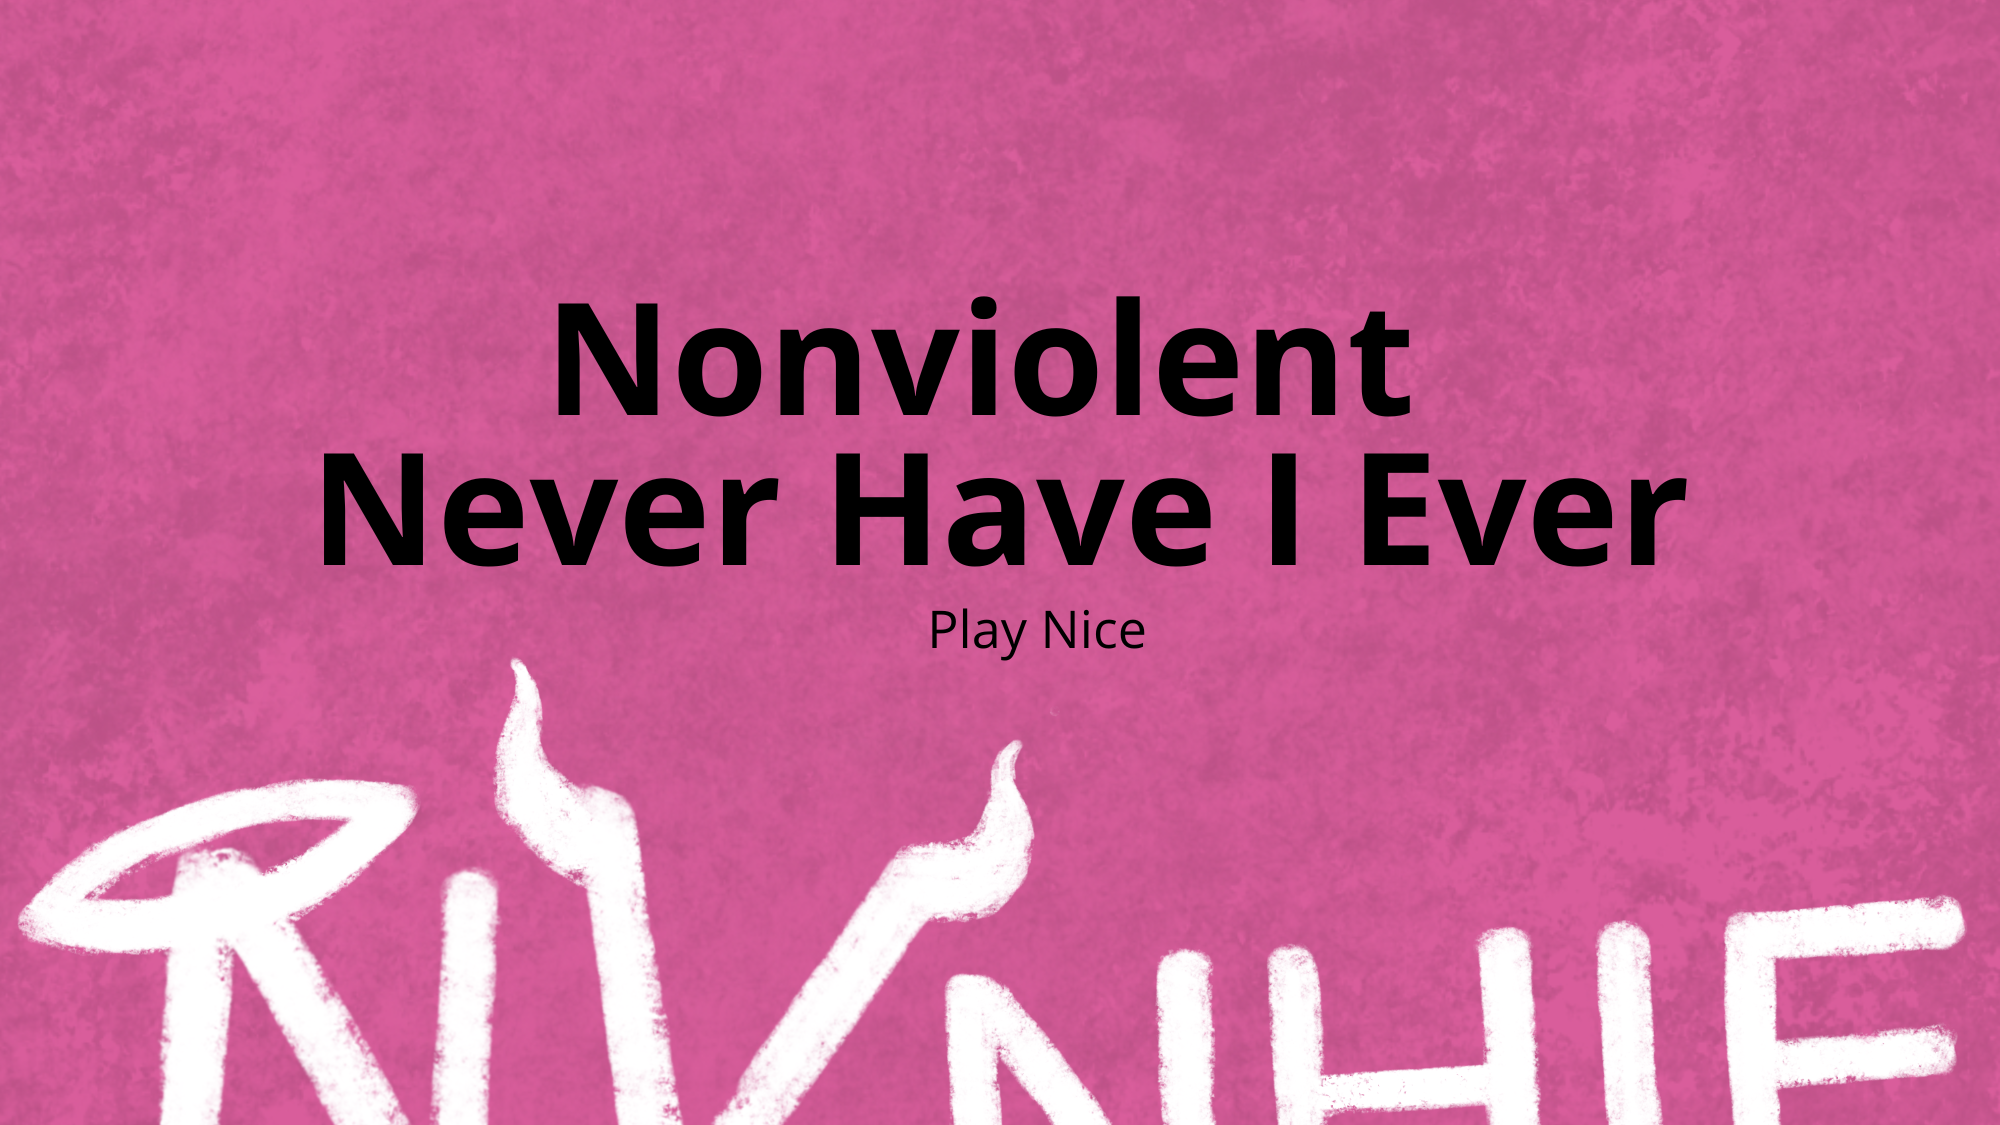 4 Nonviolent Never Have I Ever